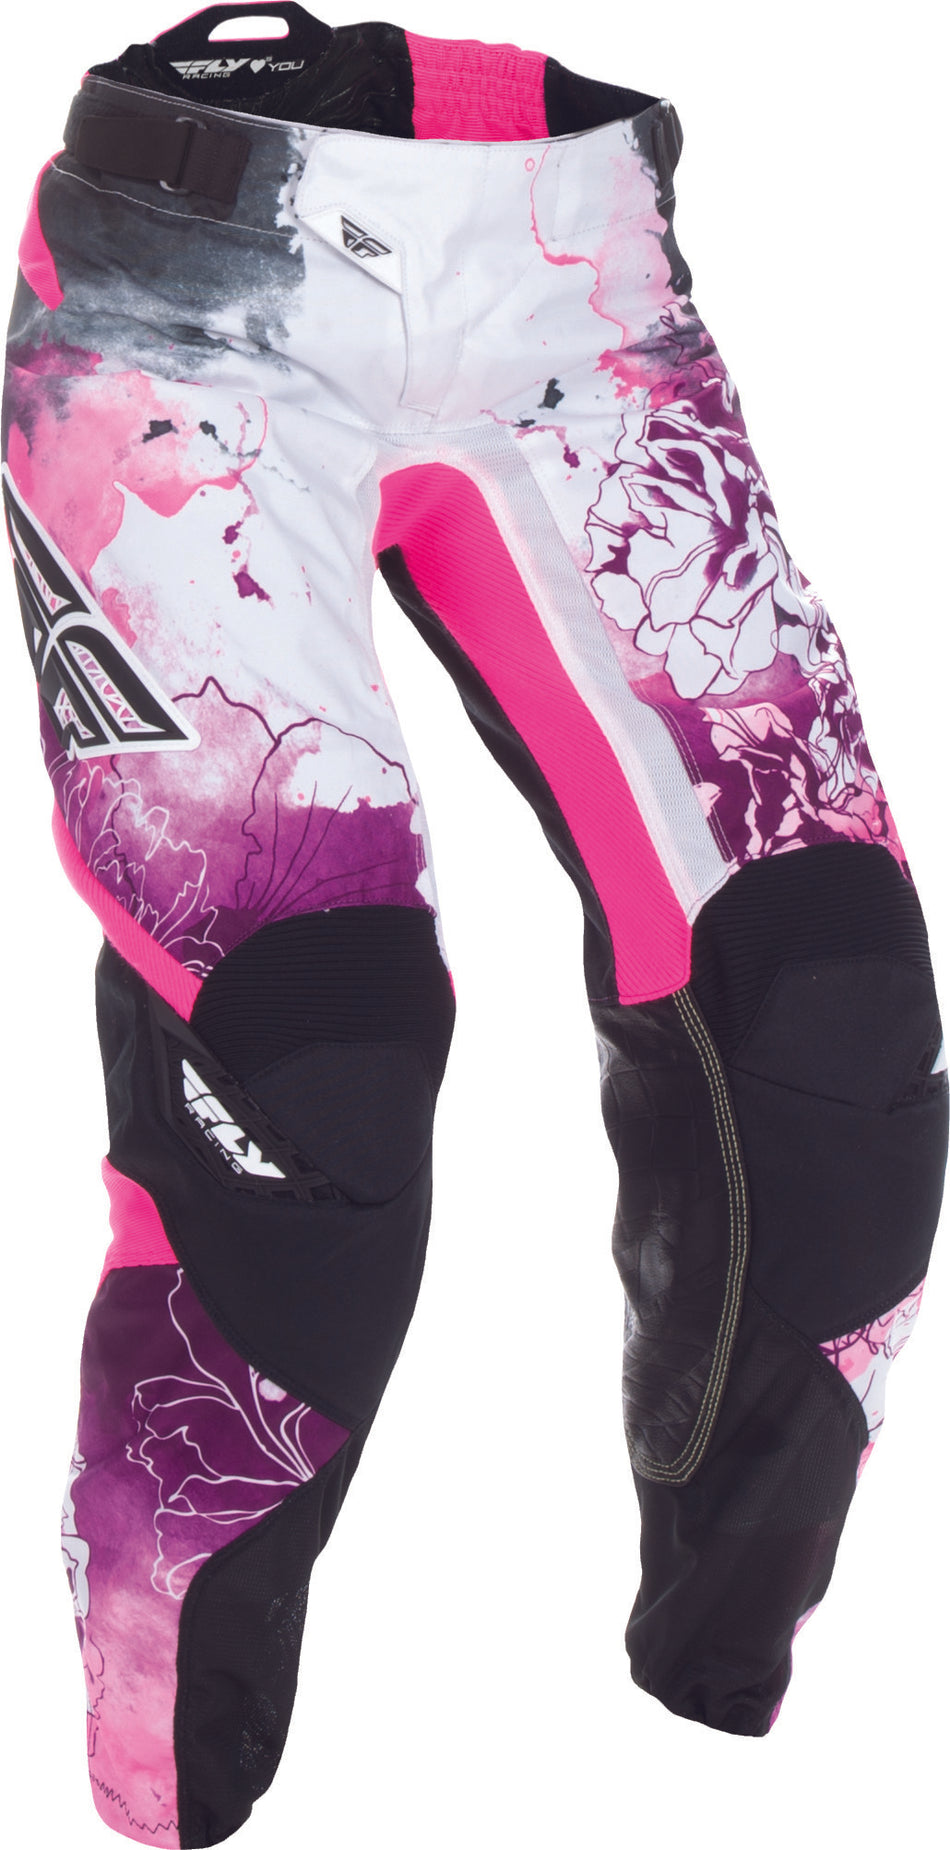 FLY RACING Kinetic Women's Race Pant Pink/Purple Sz 9/10 370-63208